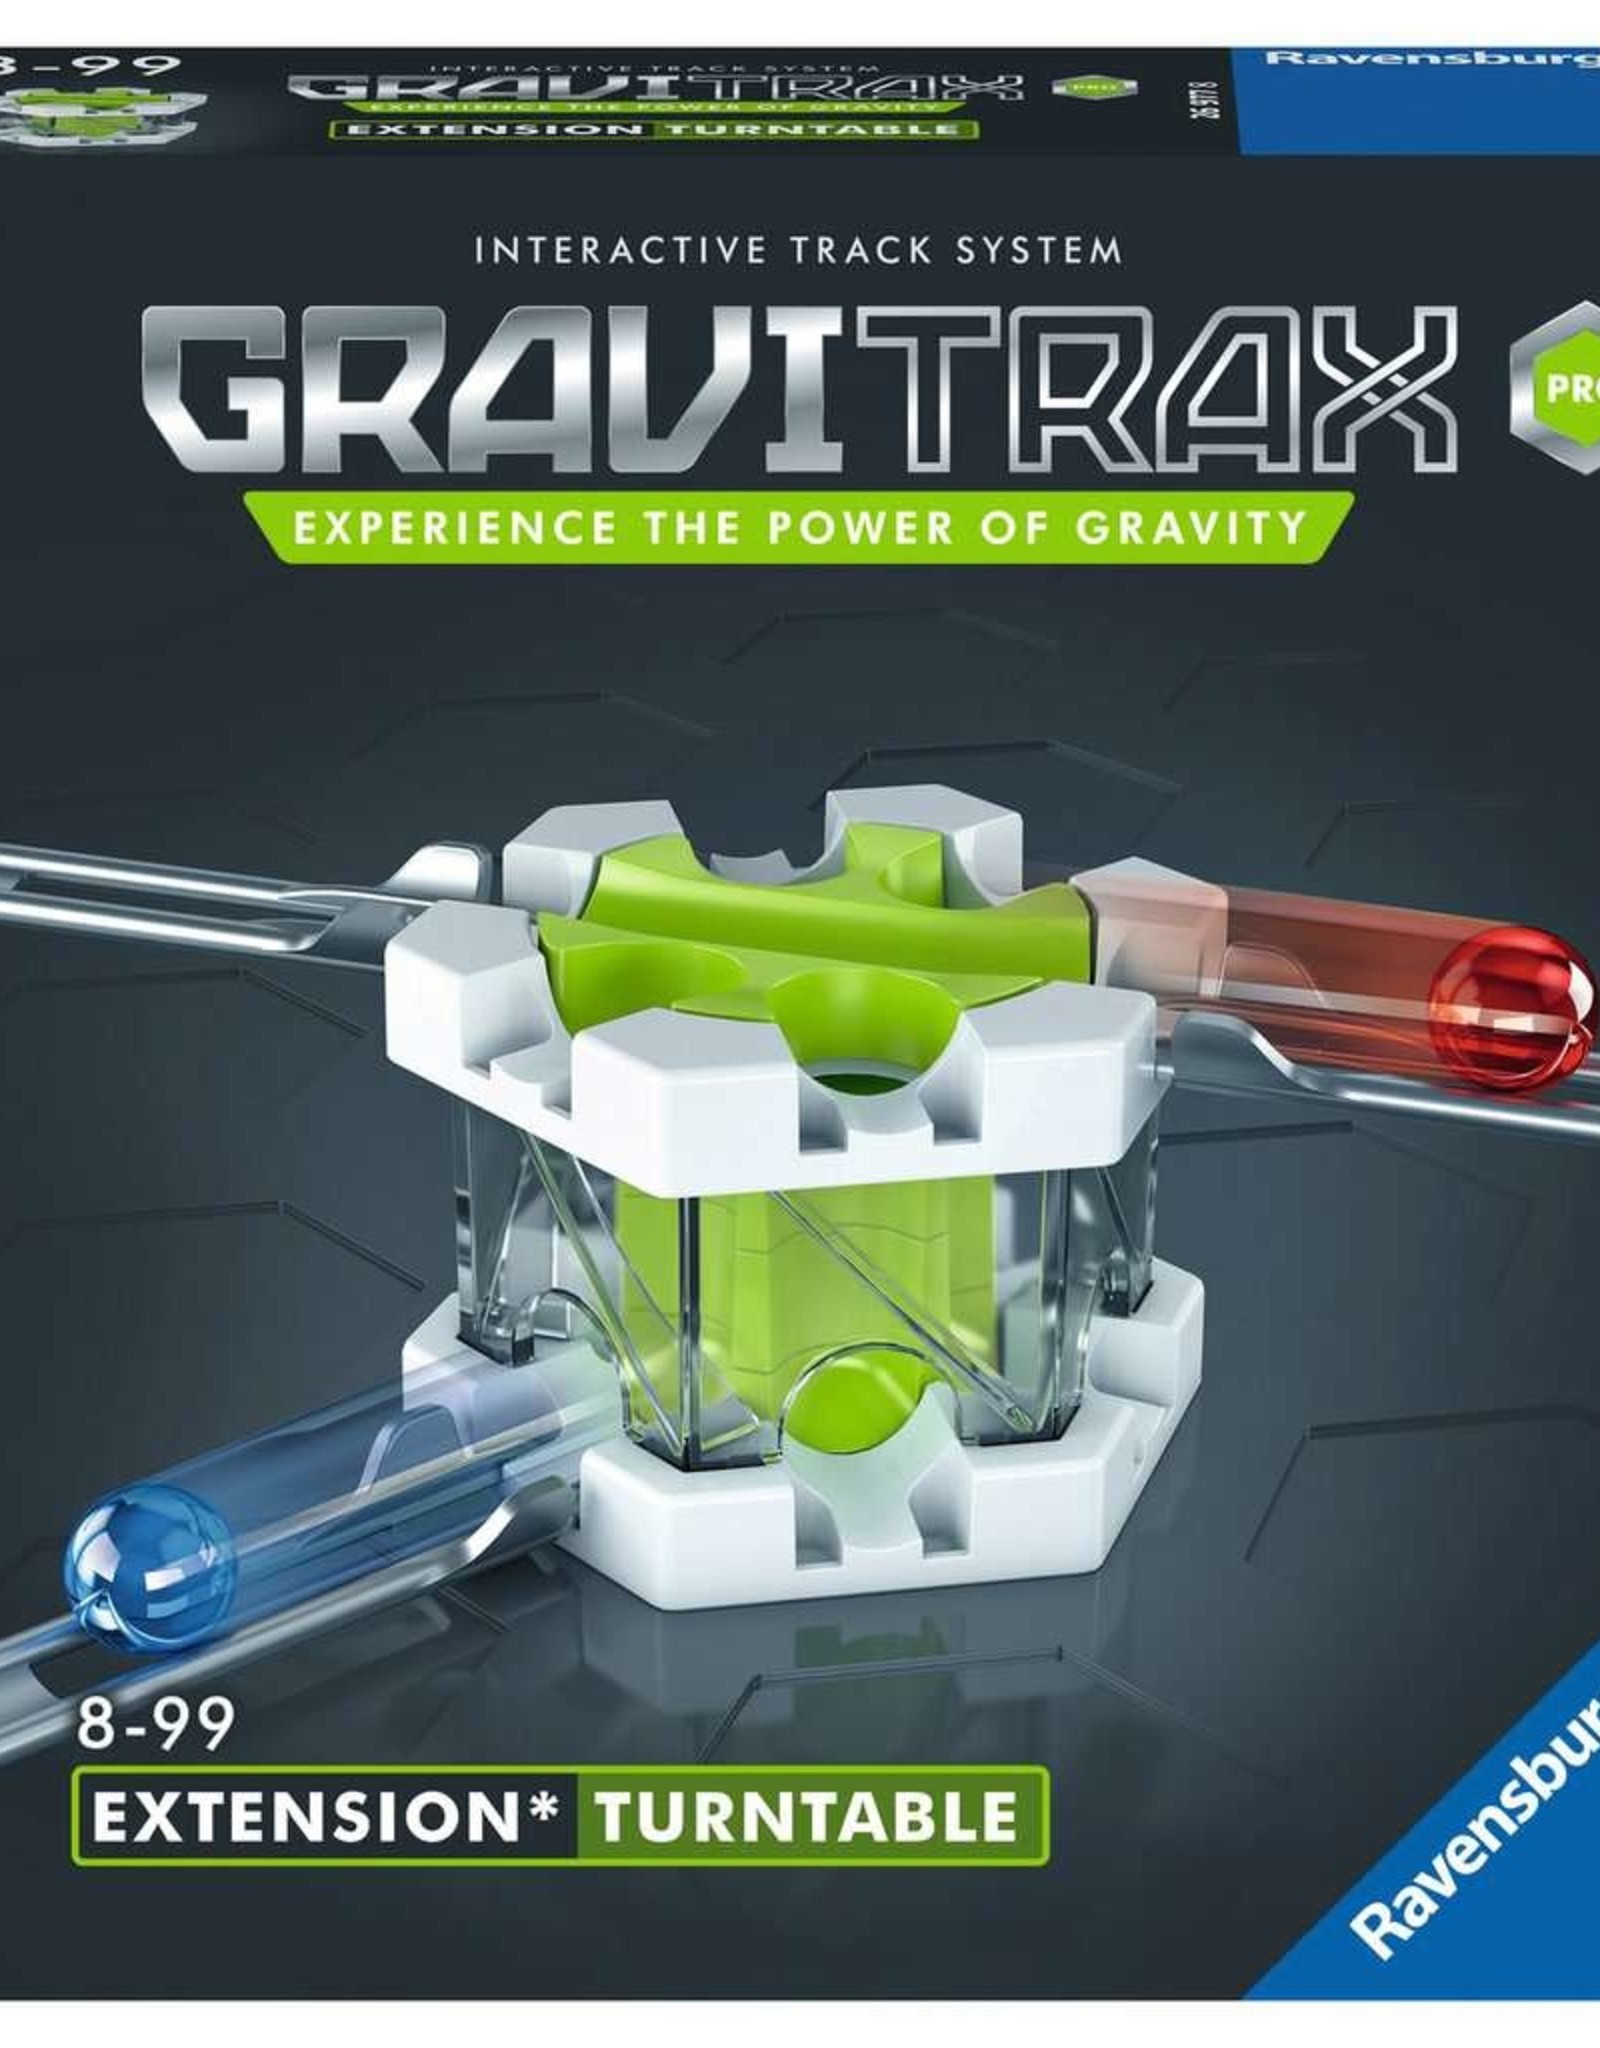 GraviTrax Gravitrax - PRO Turntable